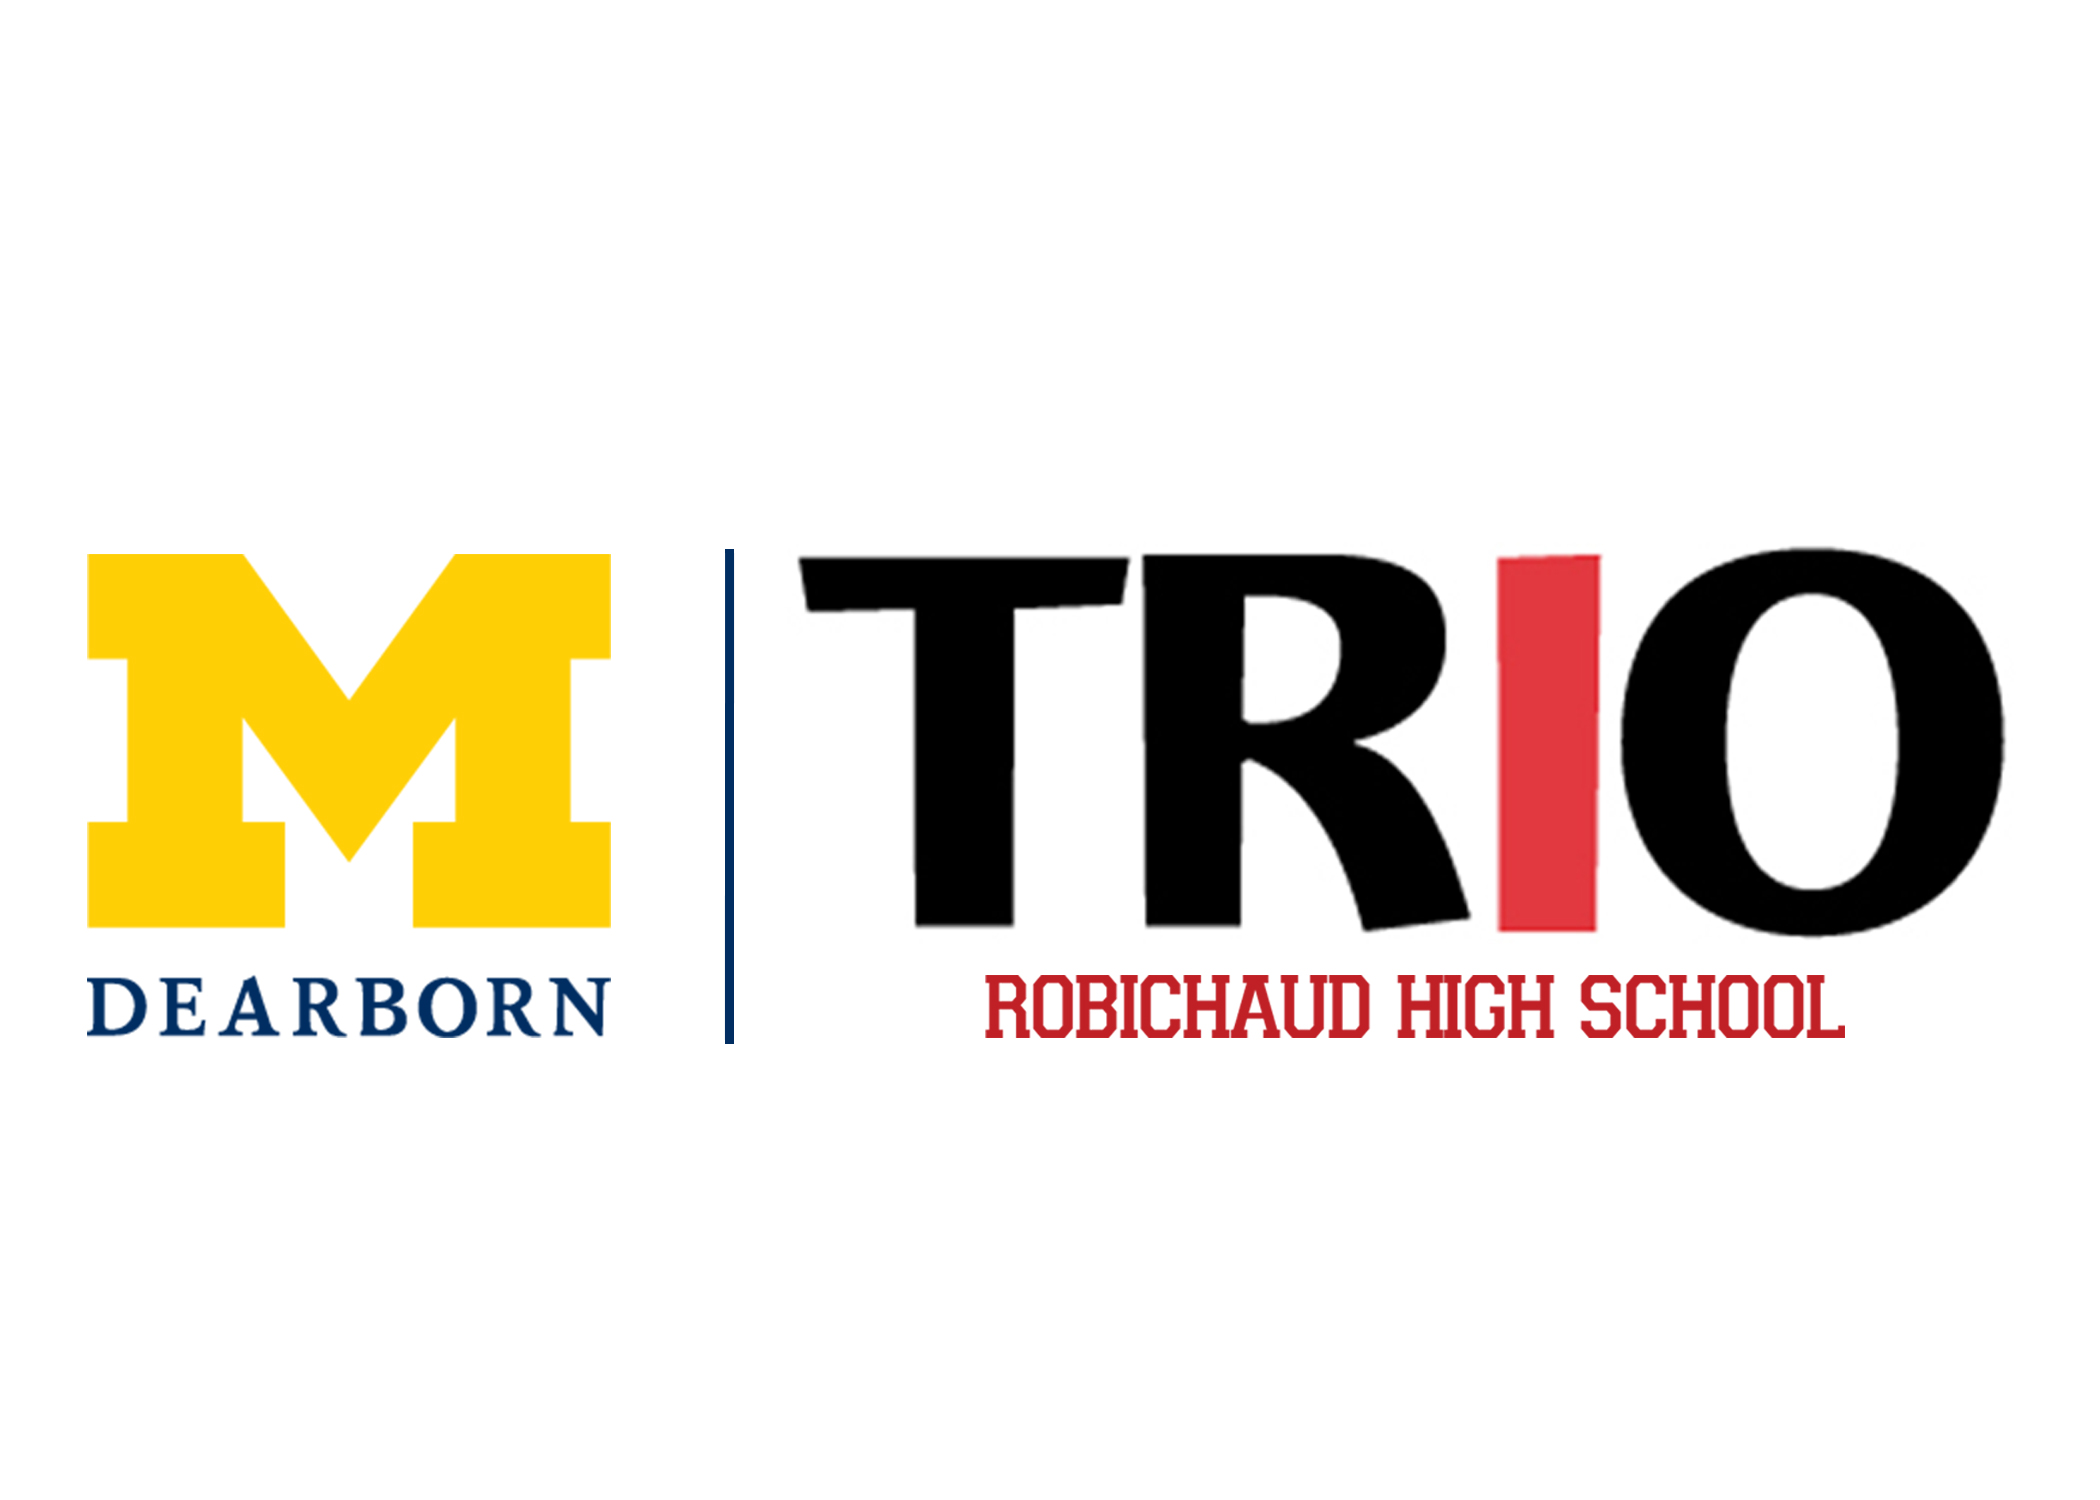 UM-Dearborn, TRIO - Robichaud High School logo